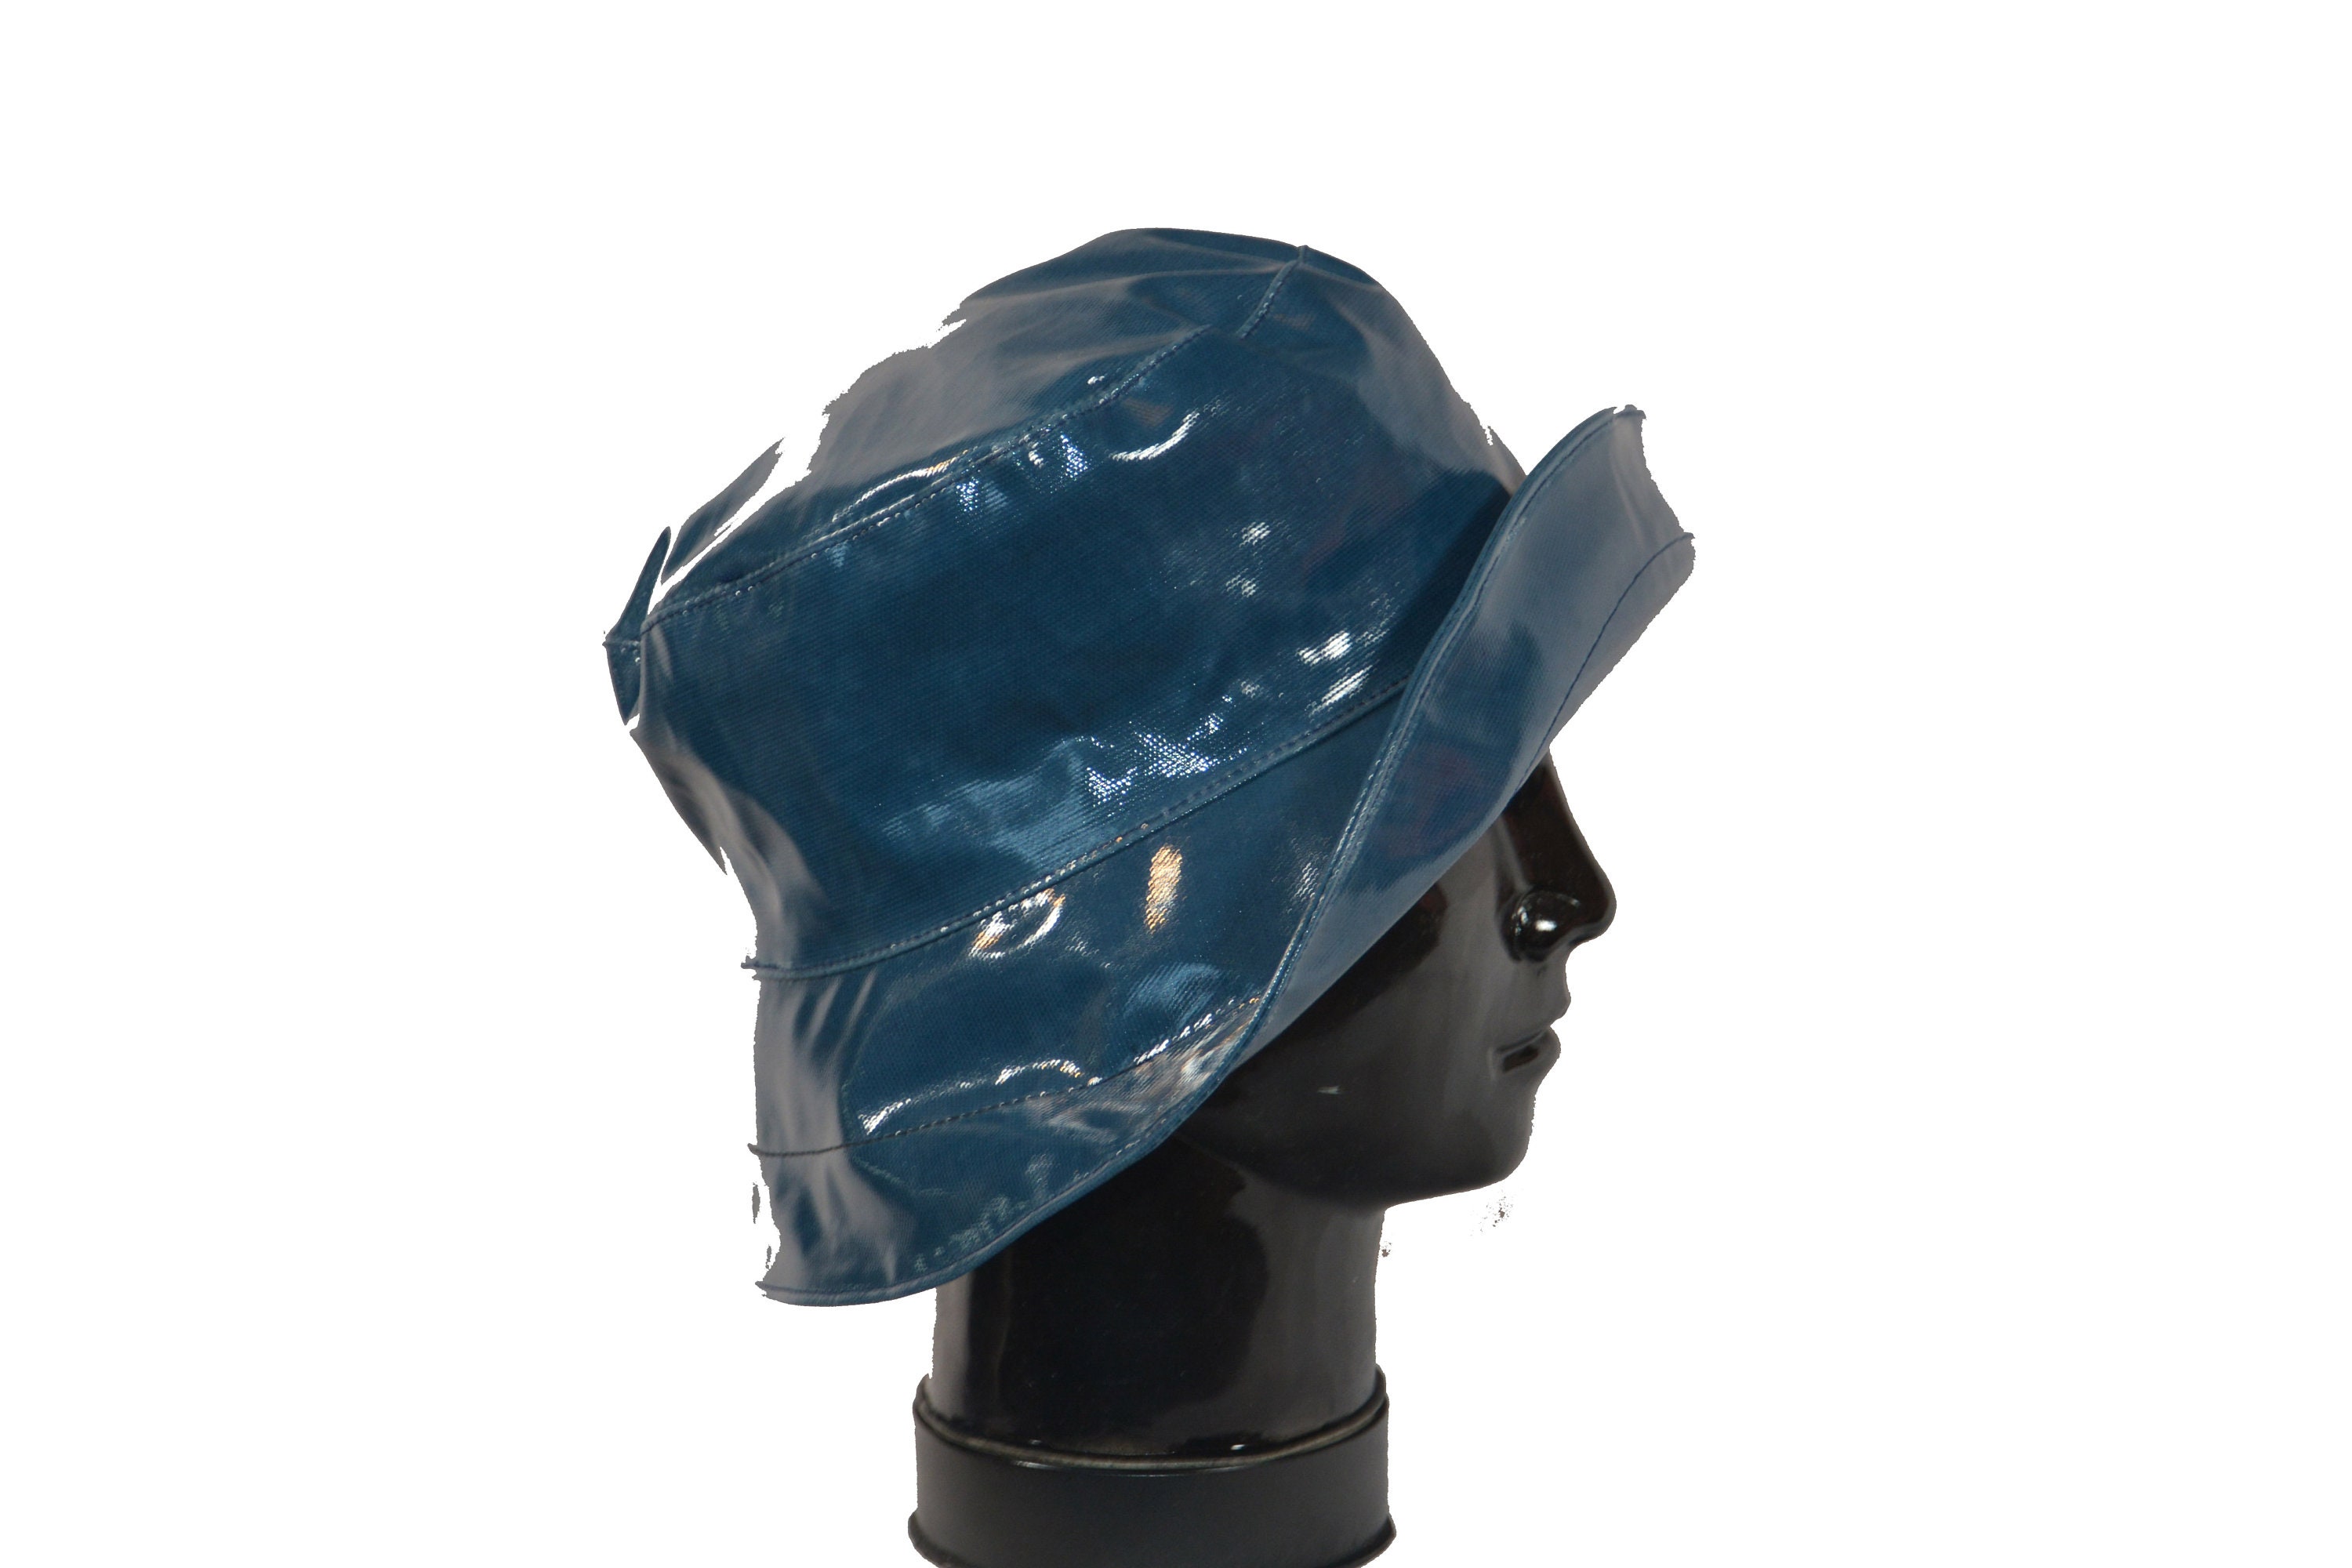 Peak & Brim Hats - Bonnie - Waterproof Tartan Rain Hat - UK Made, Navy Tartan